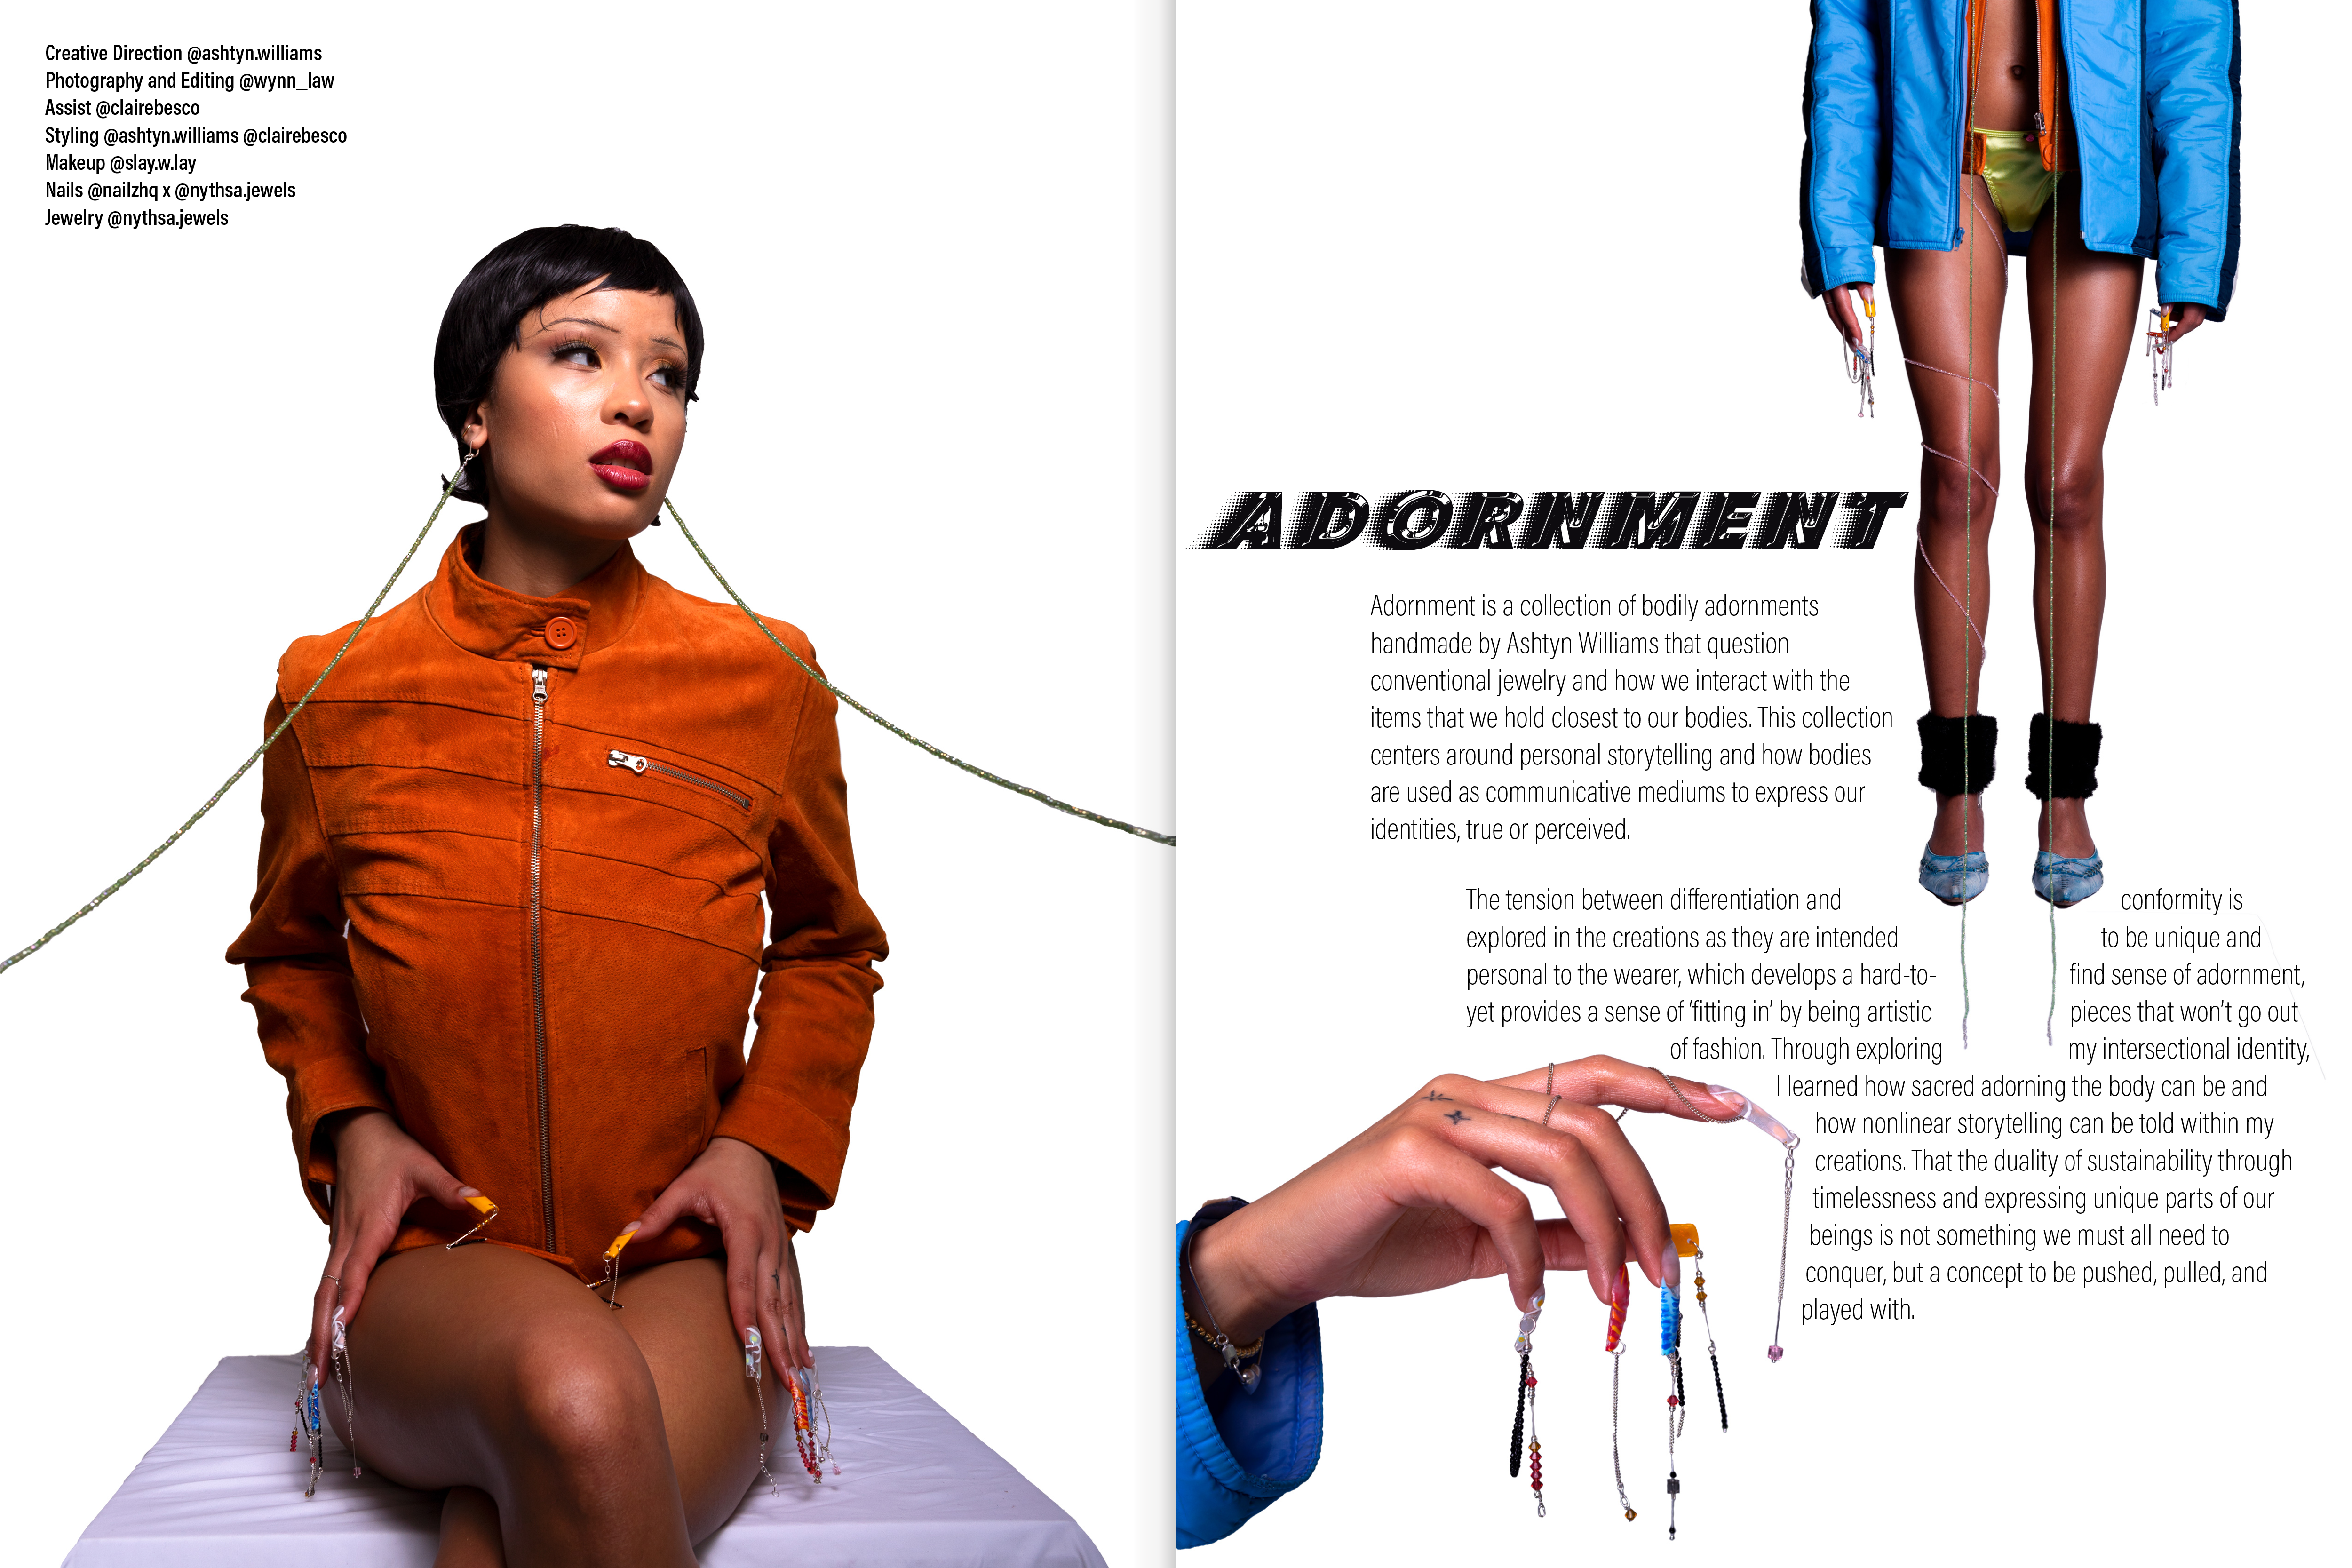 NYTHSA Editorial, "Adornment", 2022